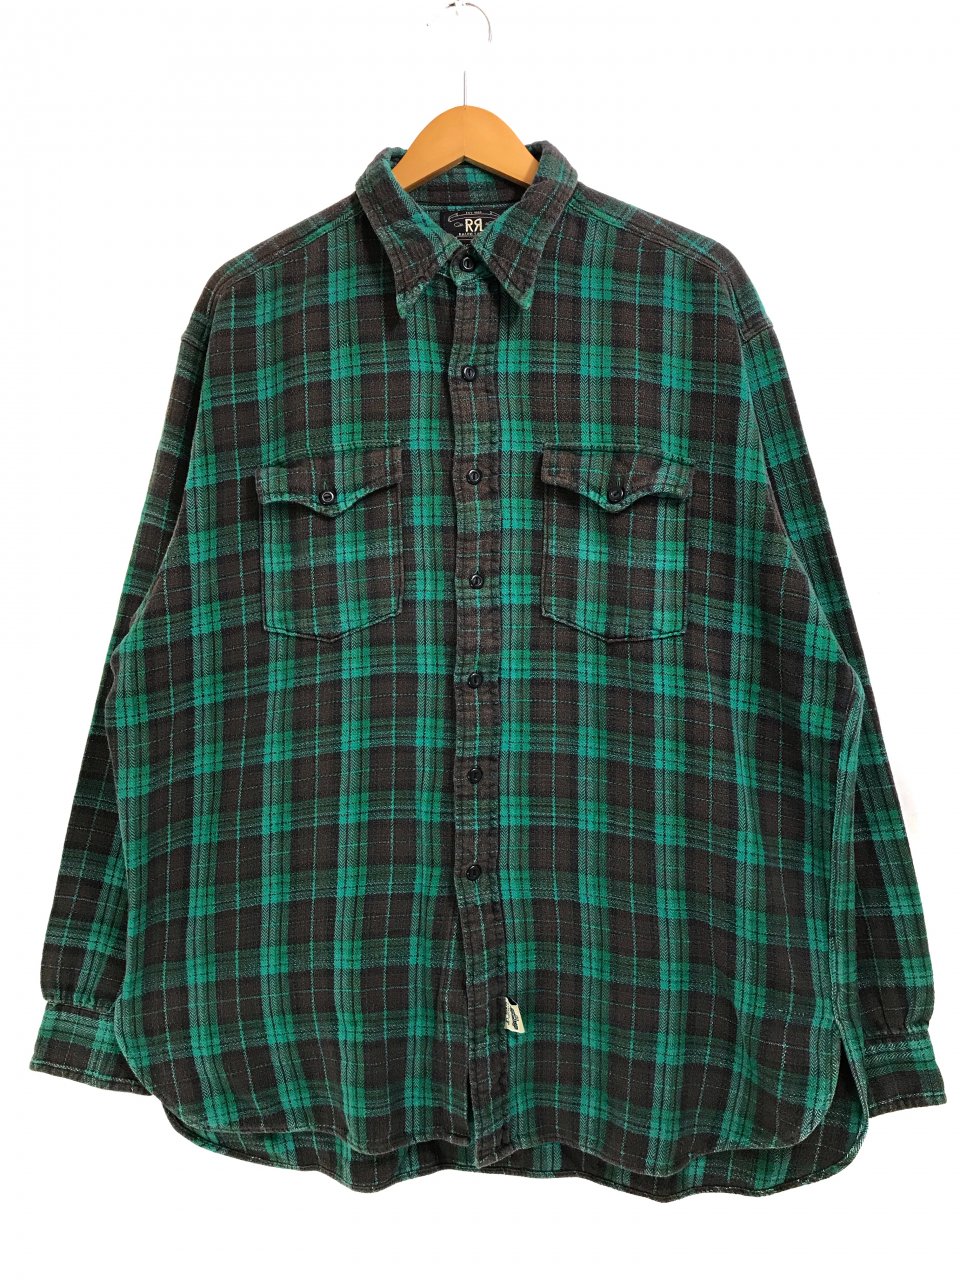 90s RRL Check Flannel L/S Shirt 緑茶 L 初期 三つ星 ダブルアール